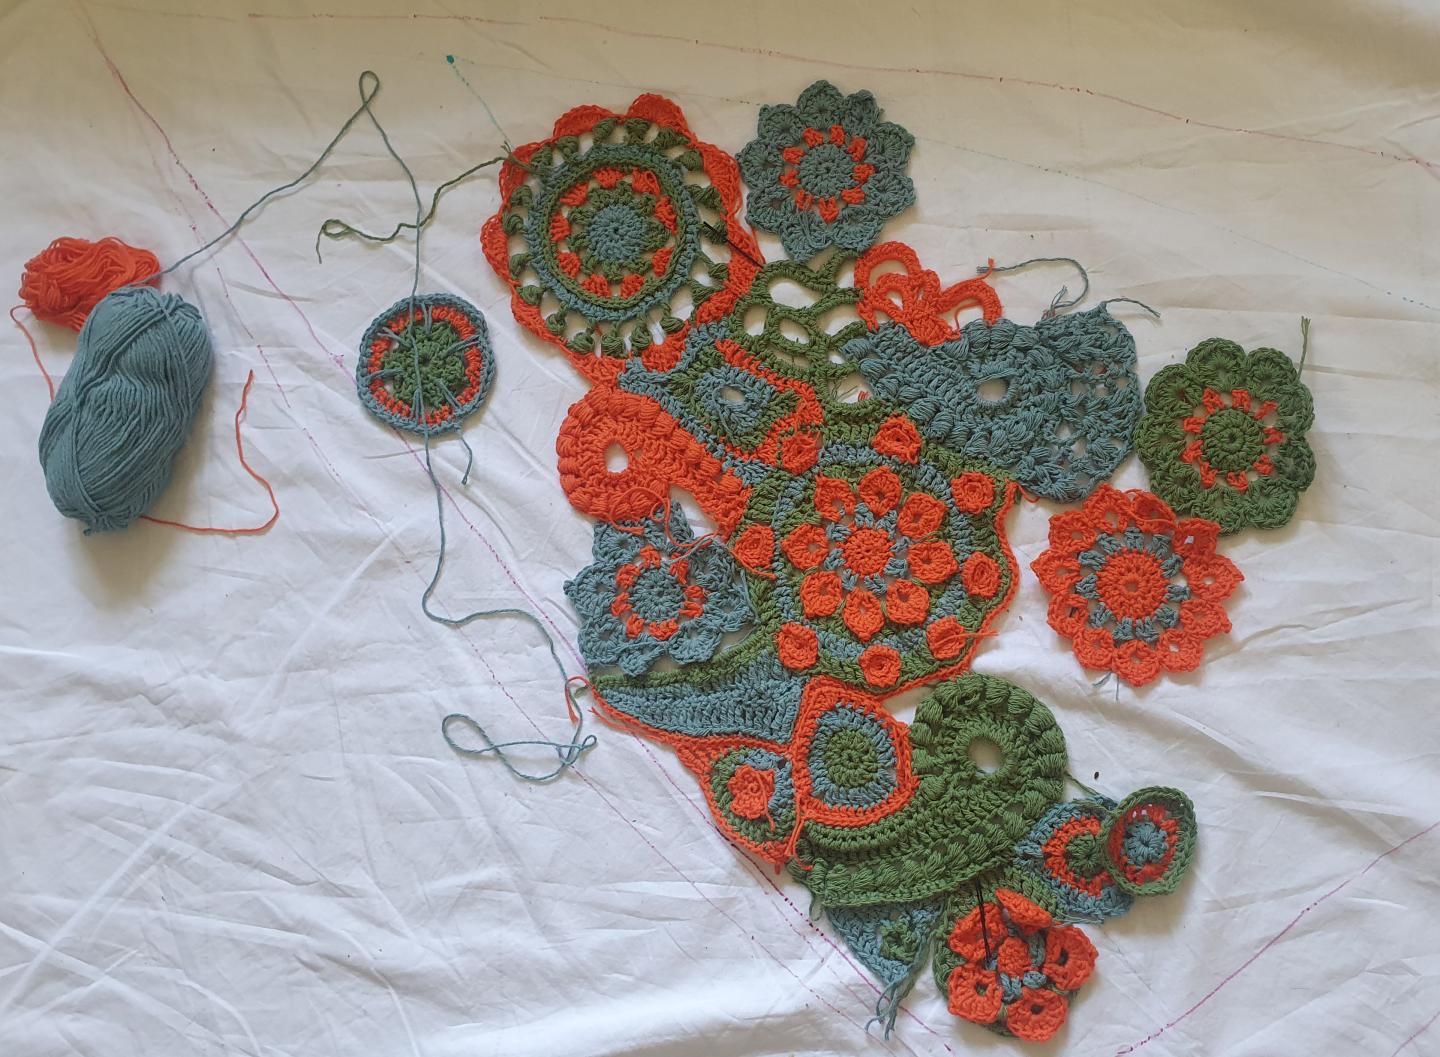 Work in progress image of blue, orange and green crochet flowers 